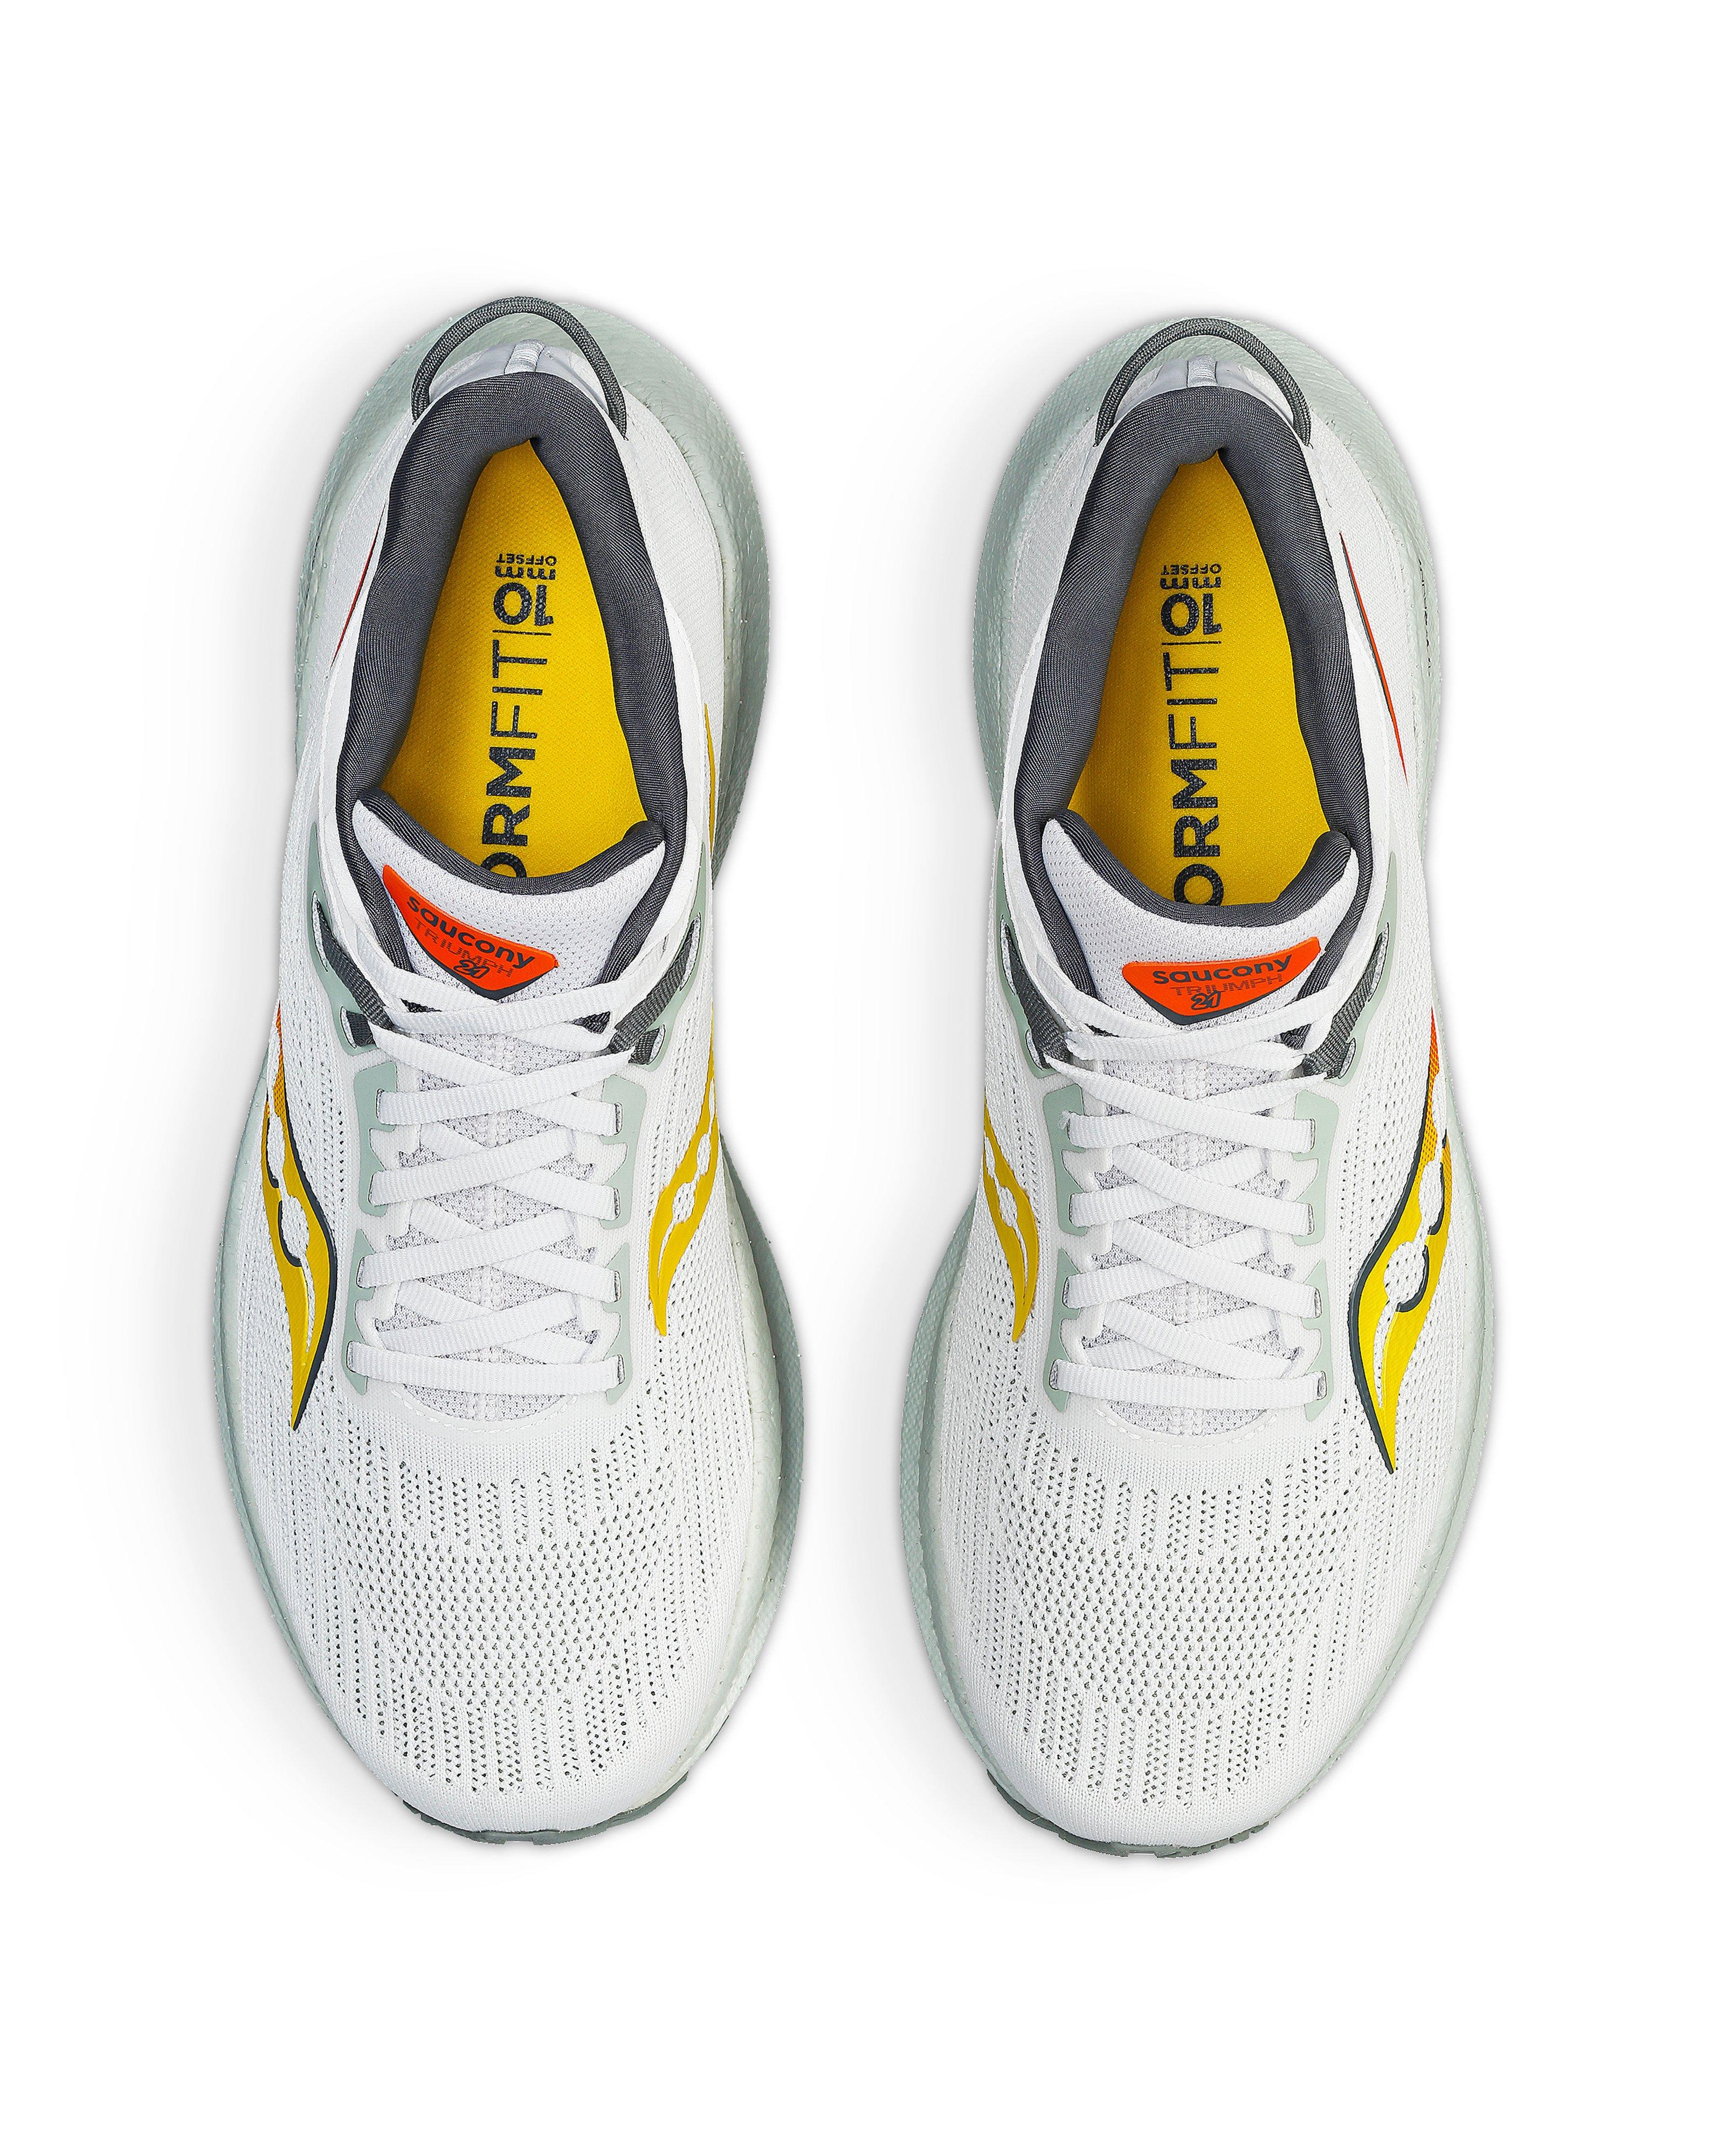 Saucony Men’s Triumph 21 Road Running Shoes -  White